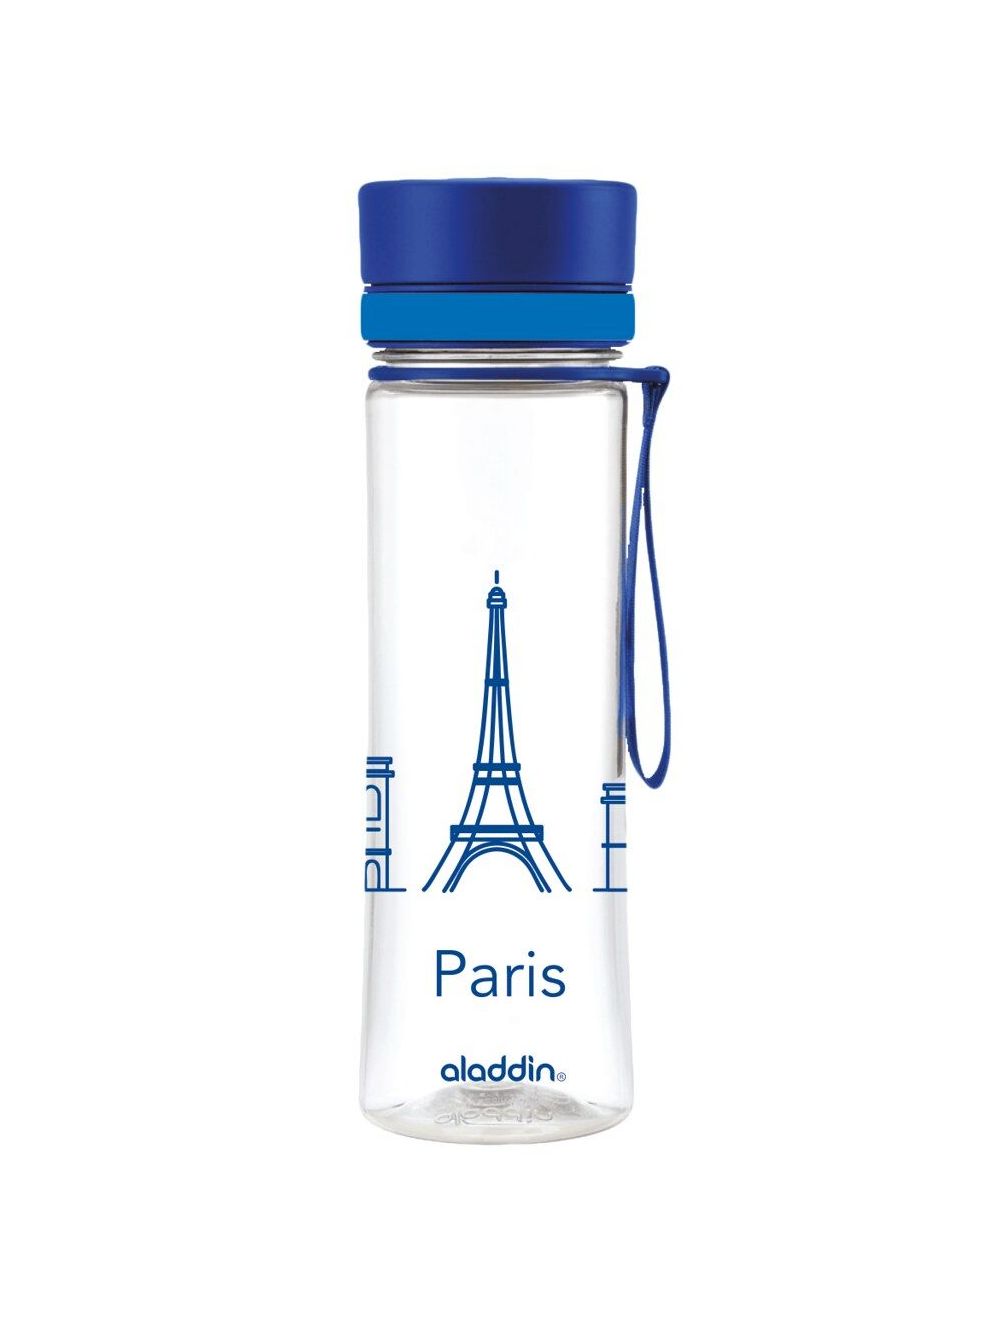 Aladdin Aveo City Series Paris Water Bottle 0.6L-10-01102-085